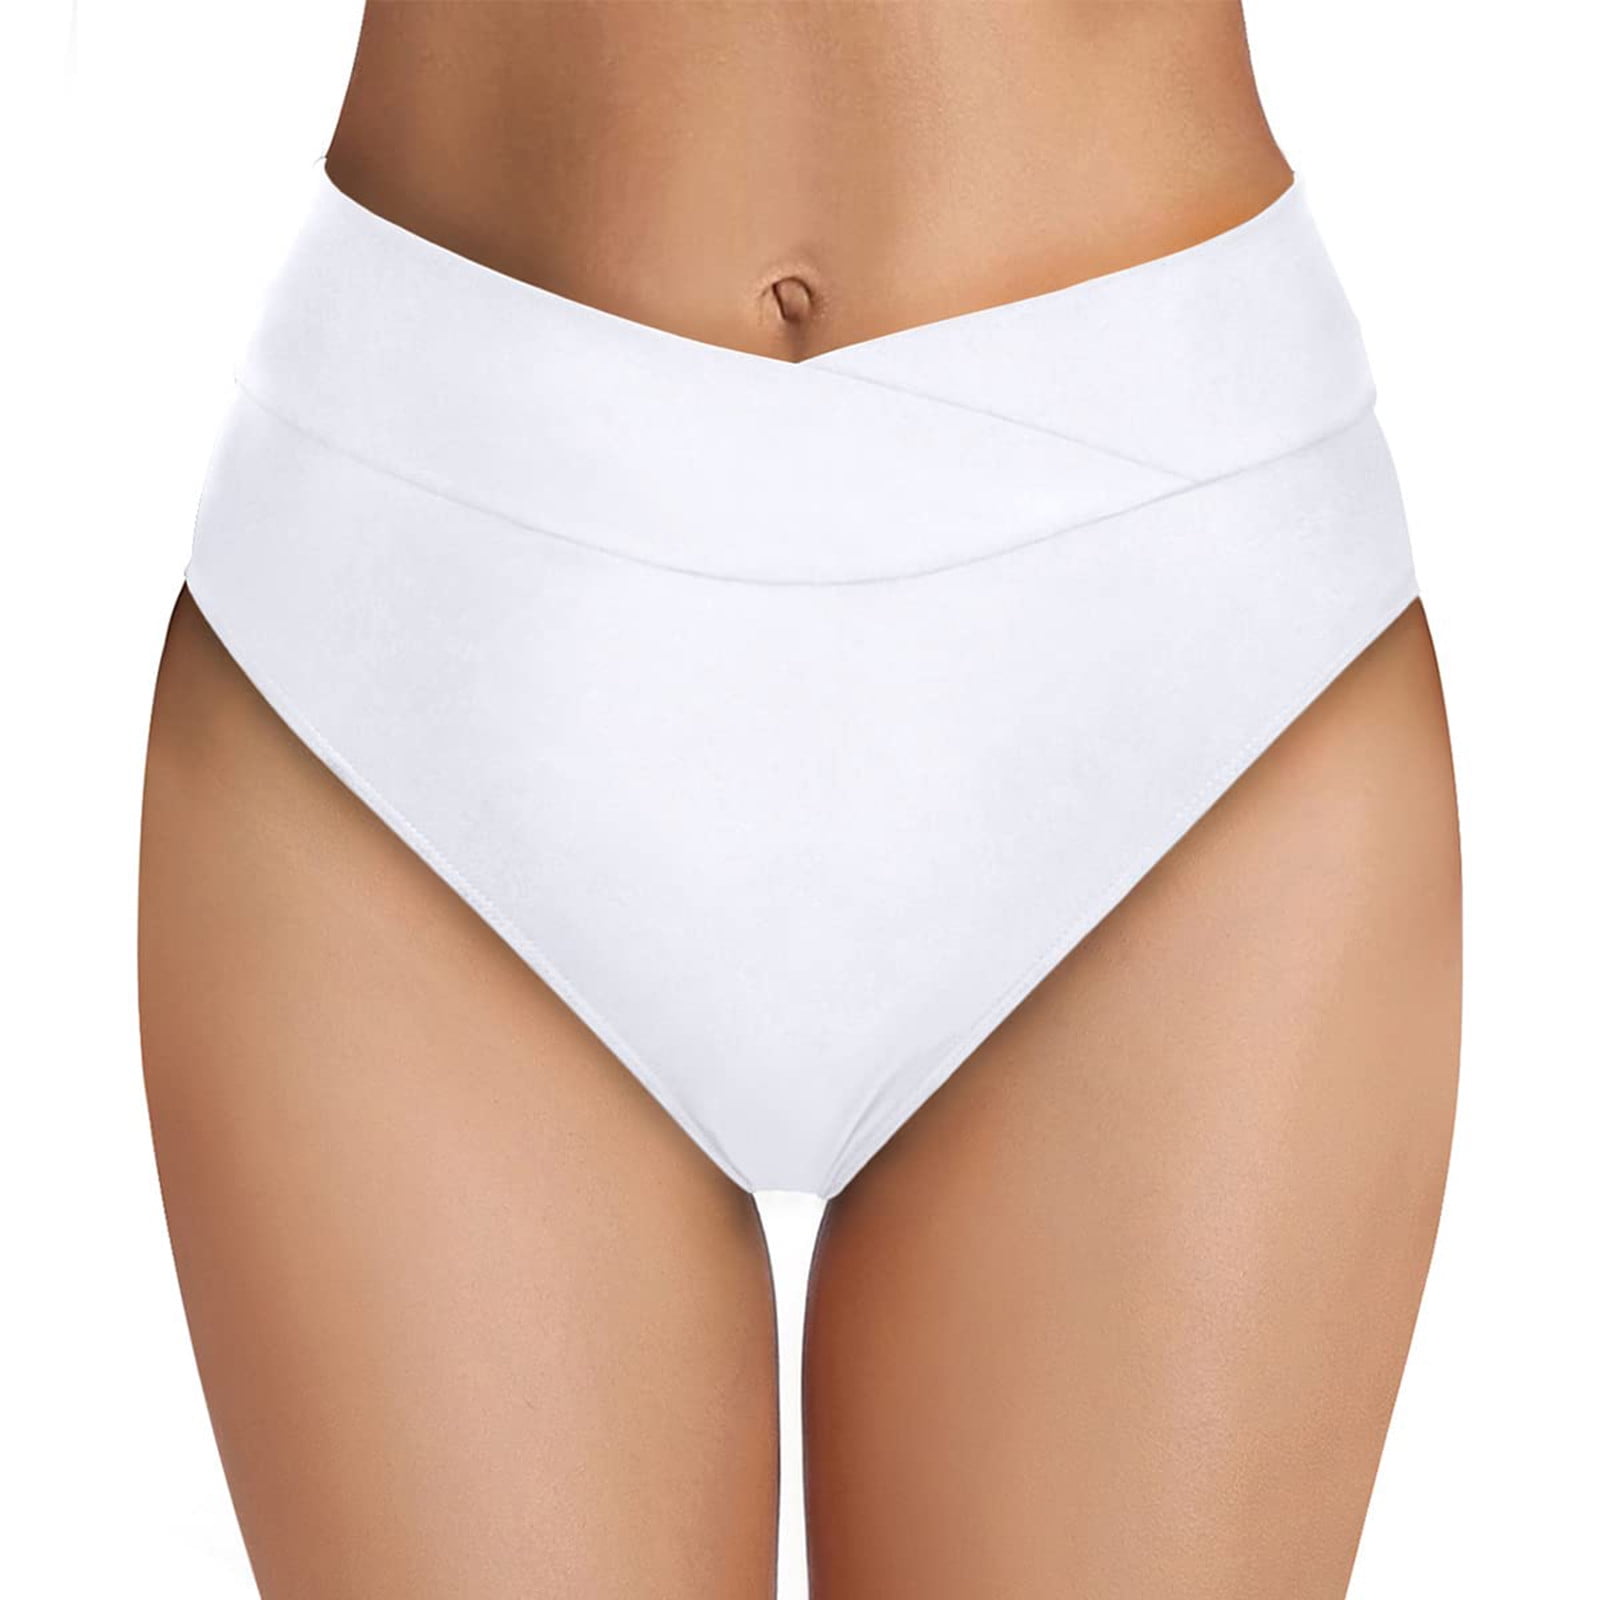 Aayomet Women High Waisted Bikini Bottoms High Cut Swim Bottom Full  Coverage Swimsuit Bottom Bathing Suit Shirt And Shorts,White XL 